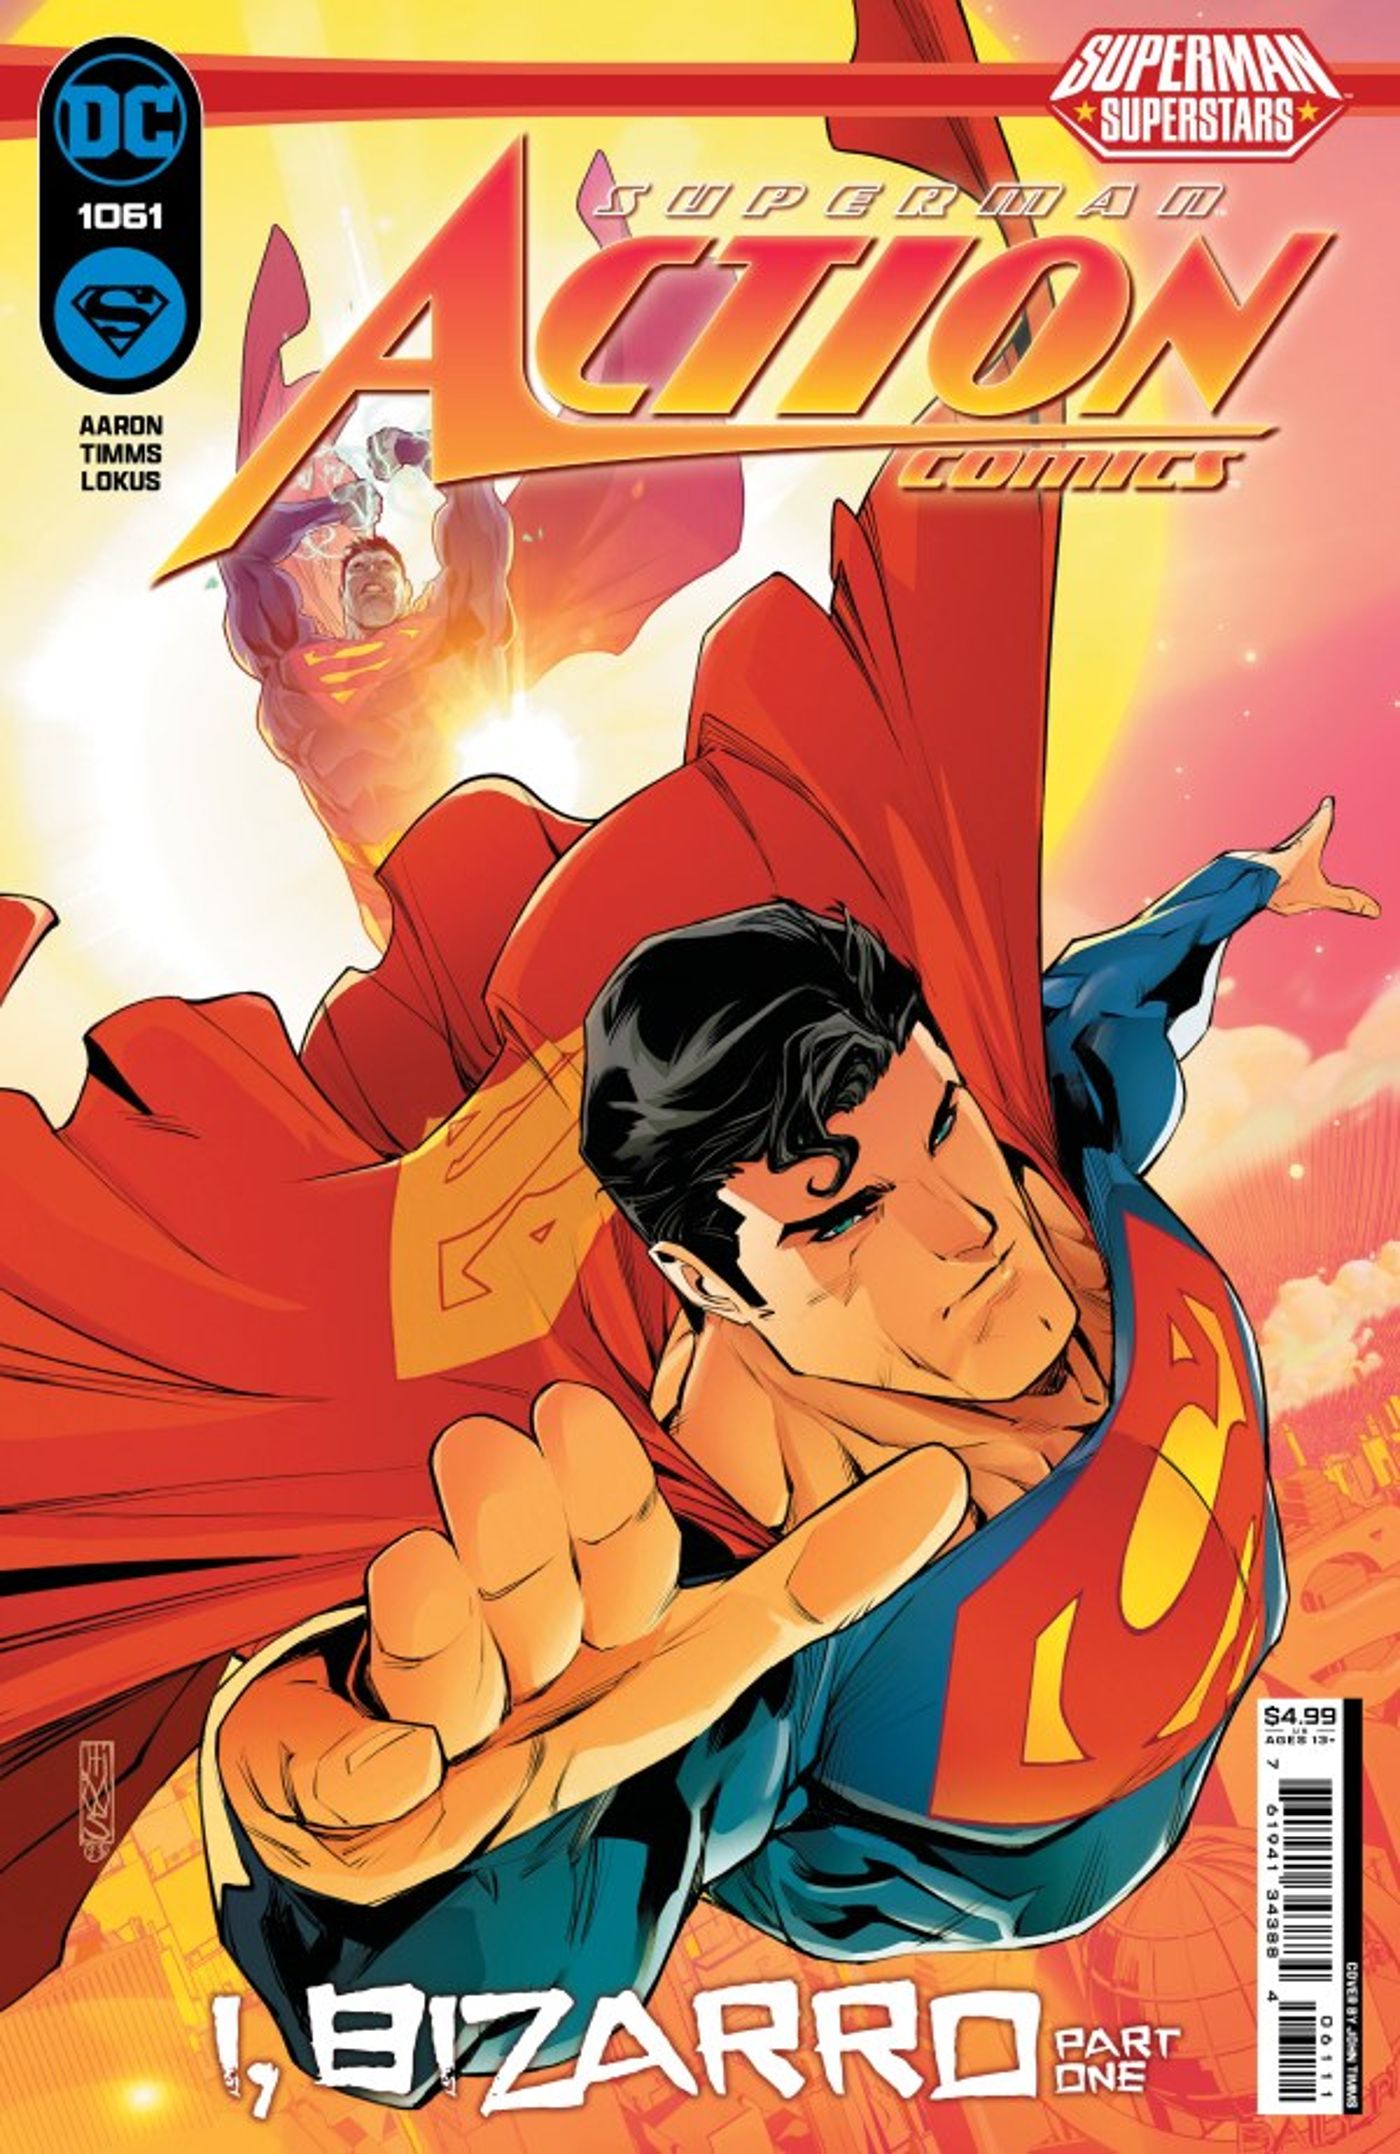 Cover for Action Comics #1061, featuring Bizarro Superman